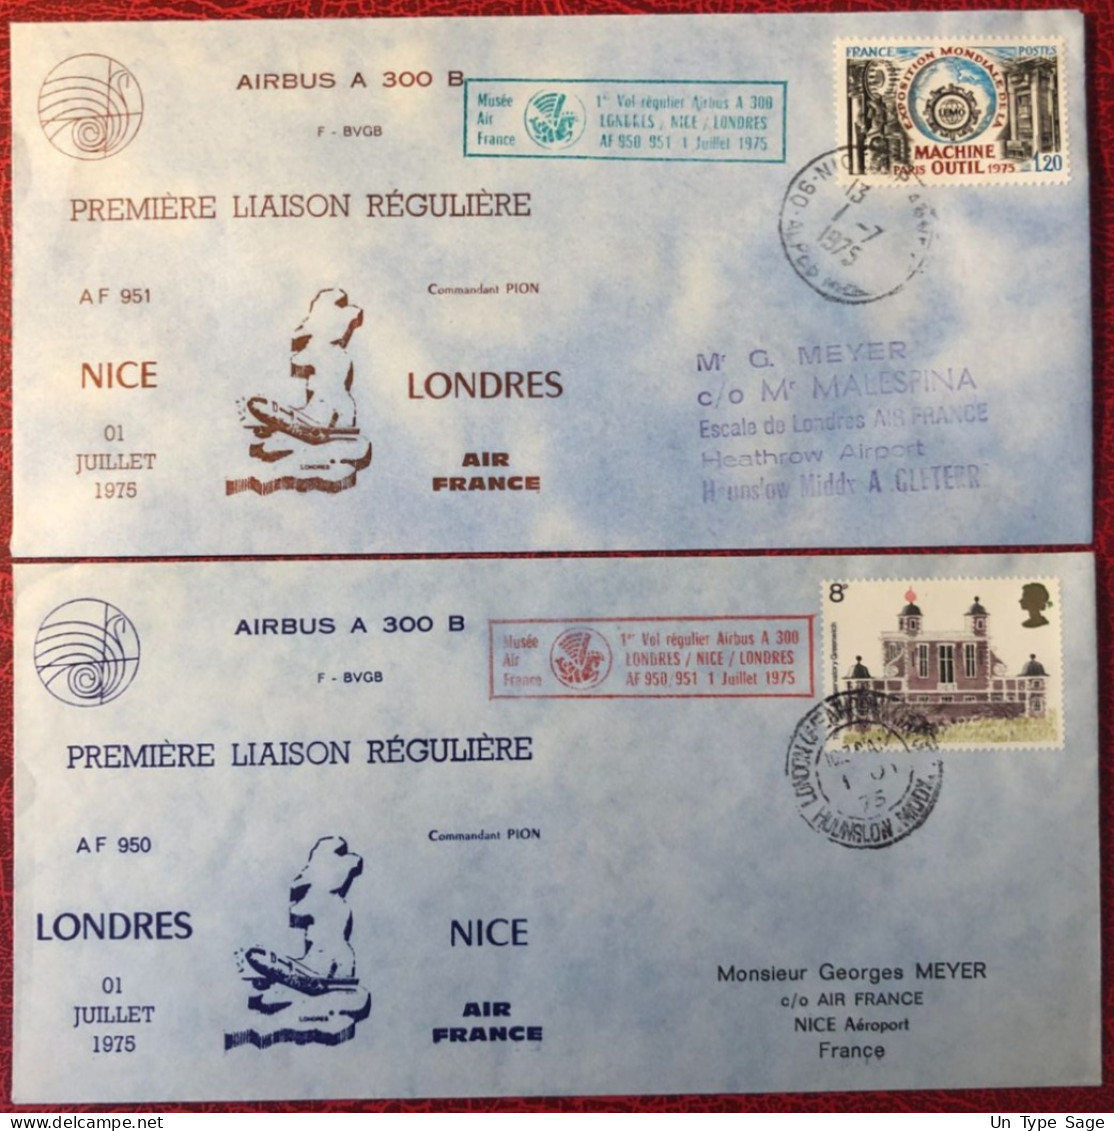 France, Premier Vol (Airbus A300) NICE / LONDRES 1.7.1975 - 2 Enveloppes - (A1498) - Primi Voli